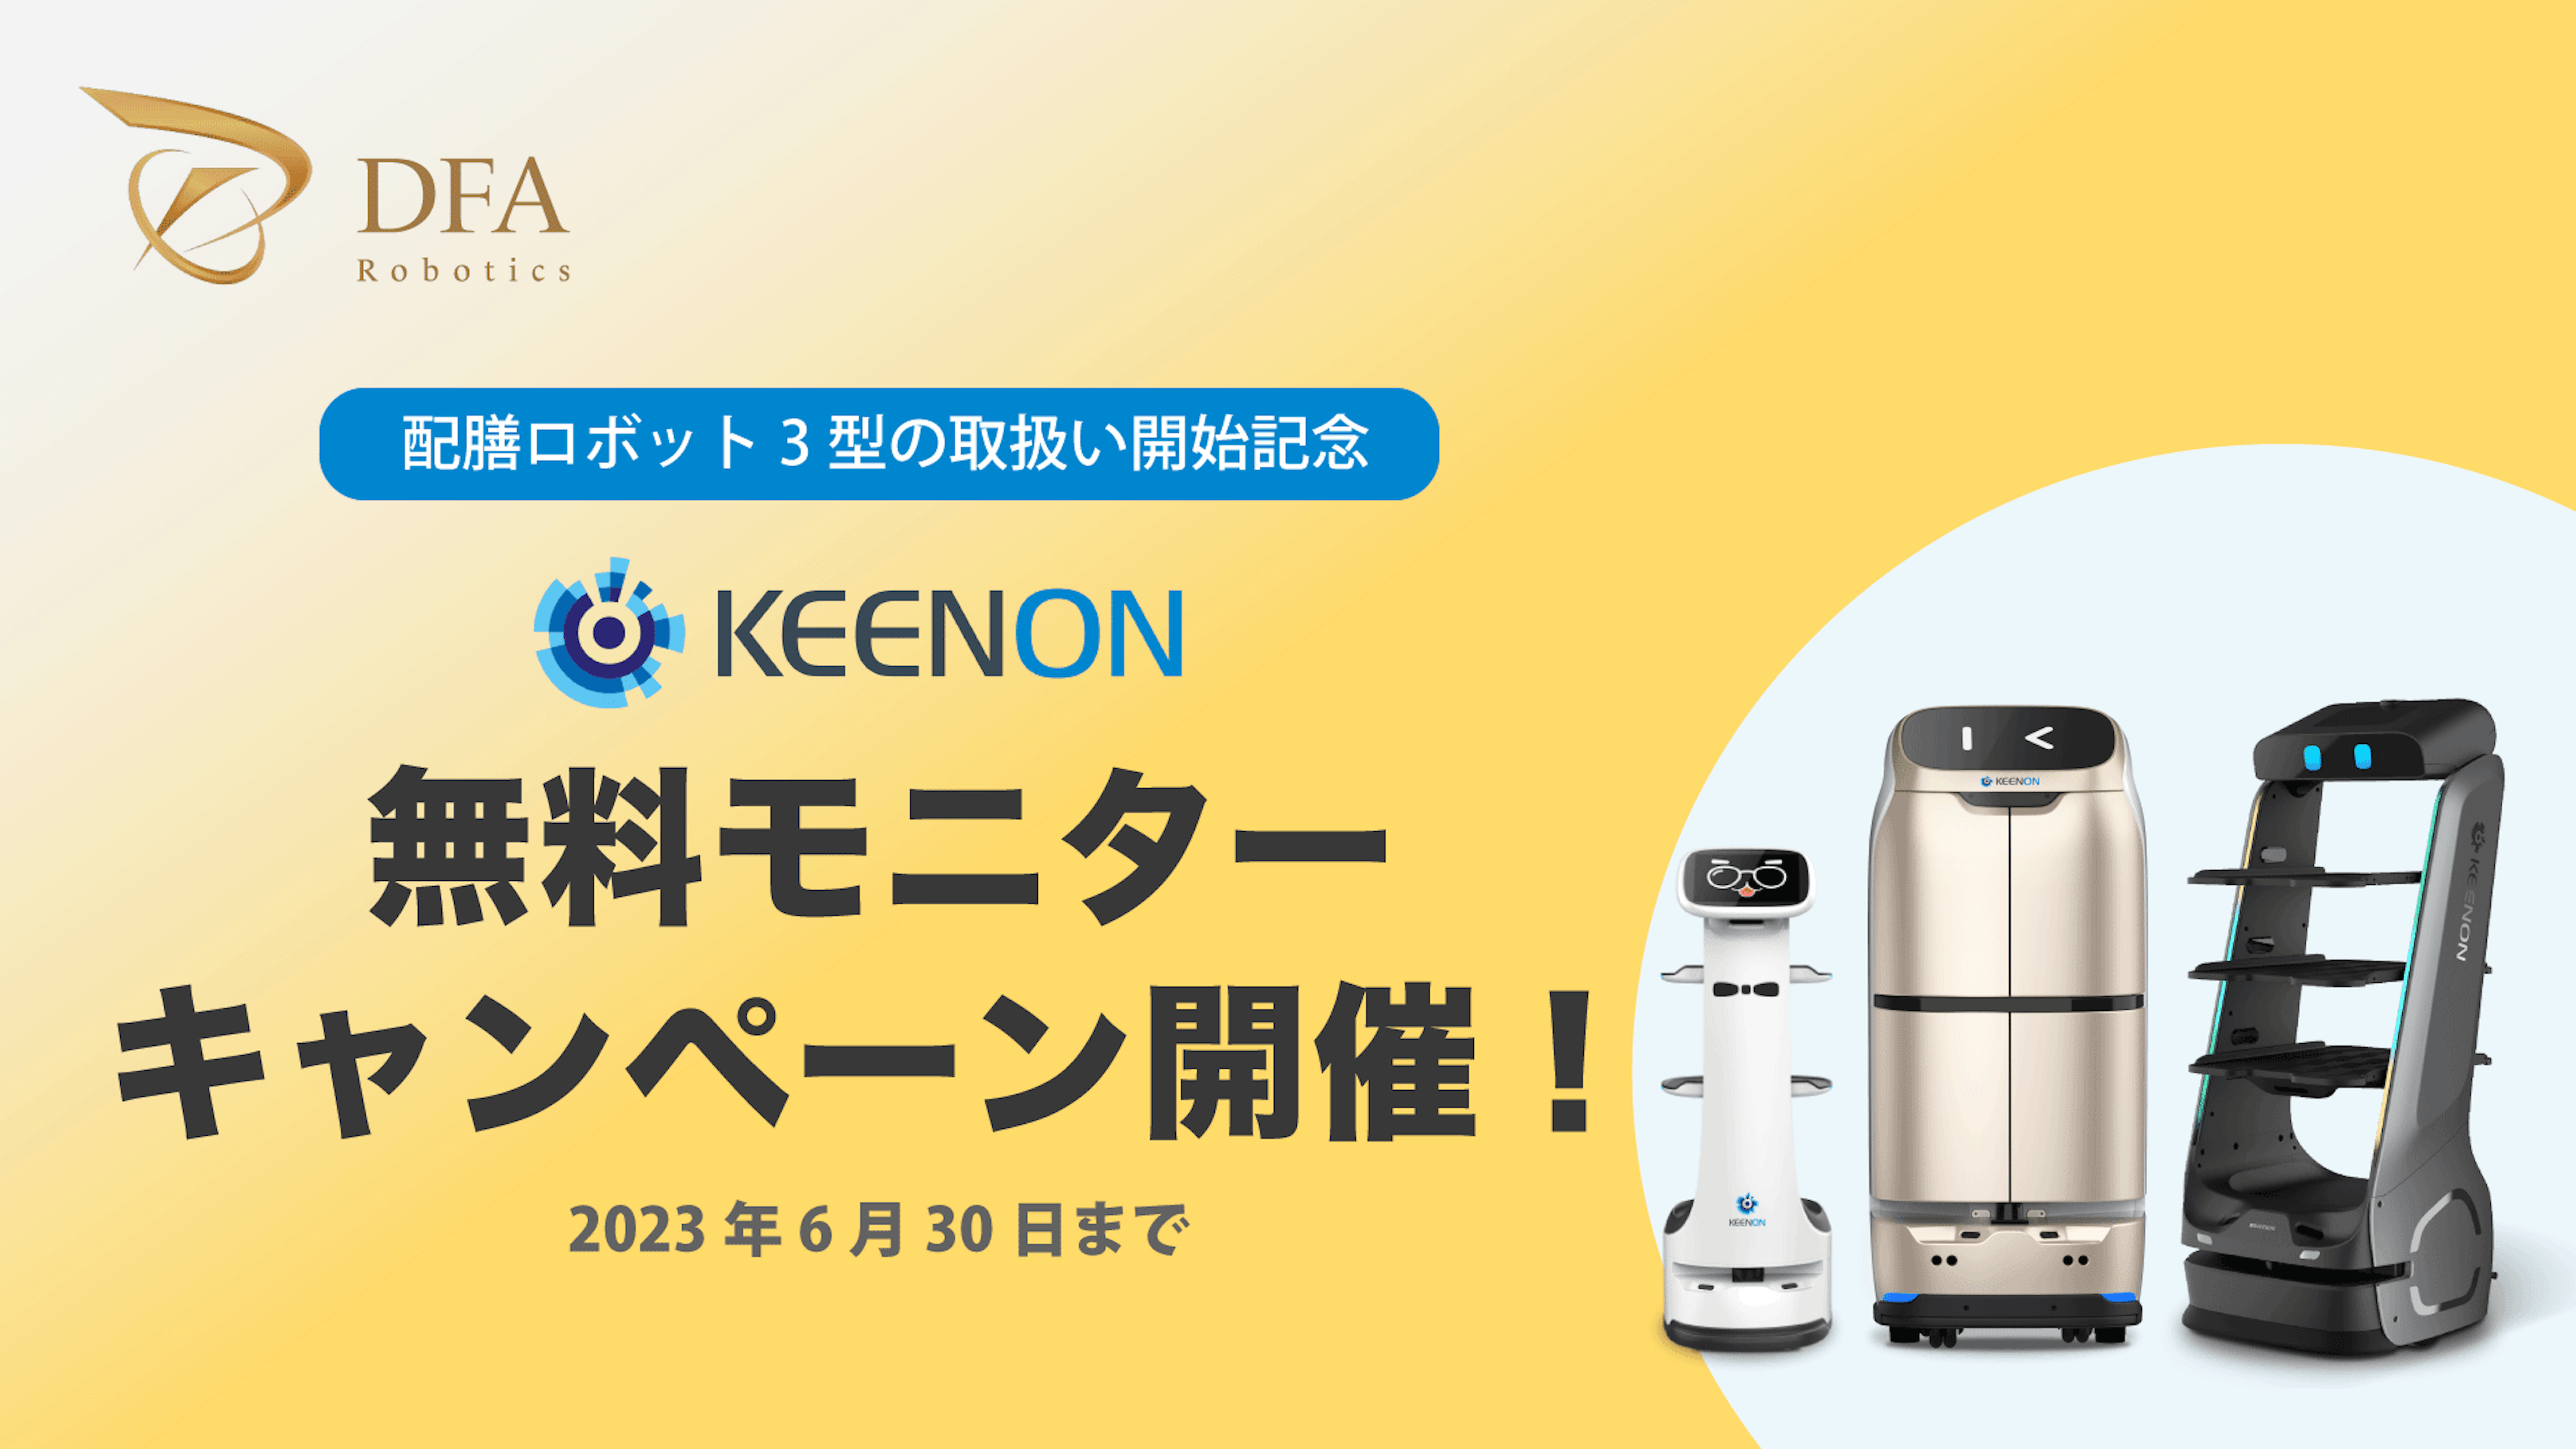 DFA Roboticsが、KEENON Robotics社製配膳ロボット3型の取扱いを開始
取扱いを記念し、サービスロボット導入を検討中の企業様向けに導入無料モニターキャンペーンを開催のキービジュアル